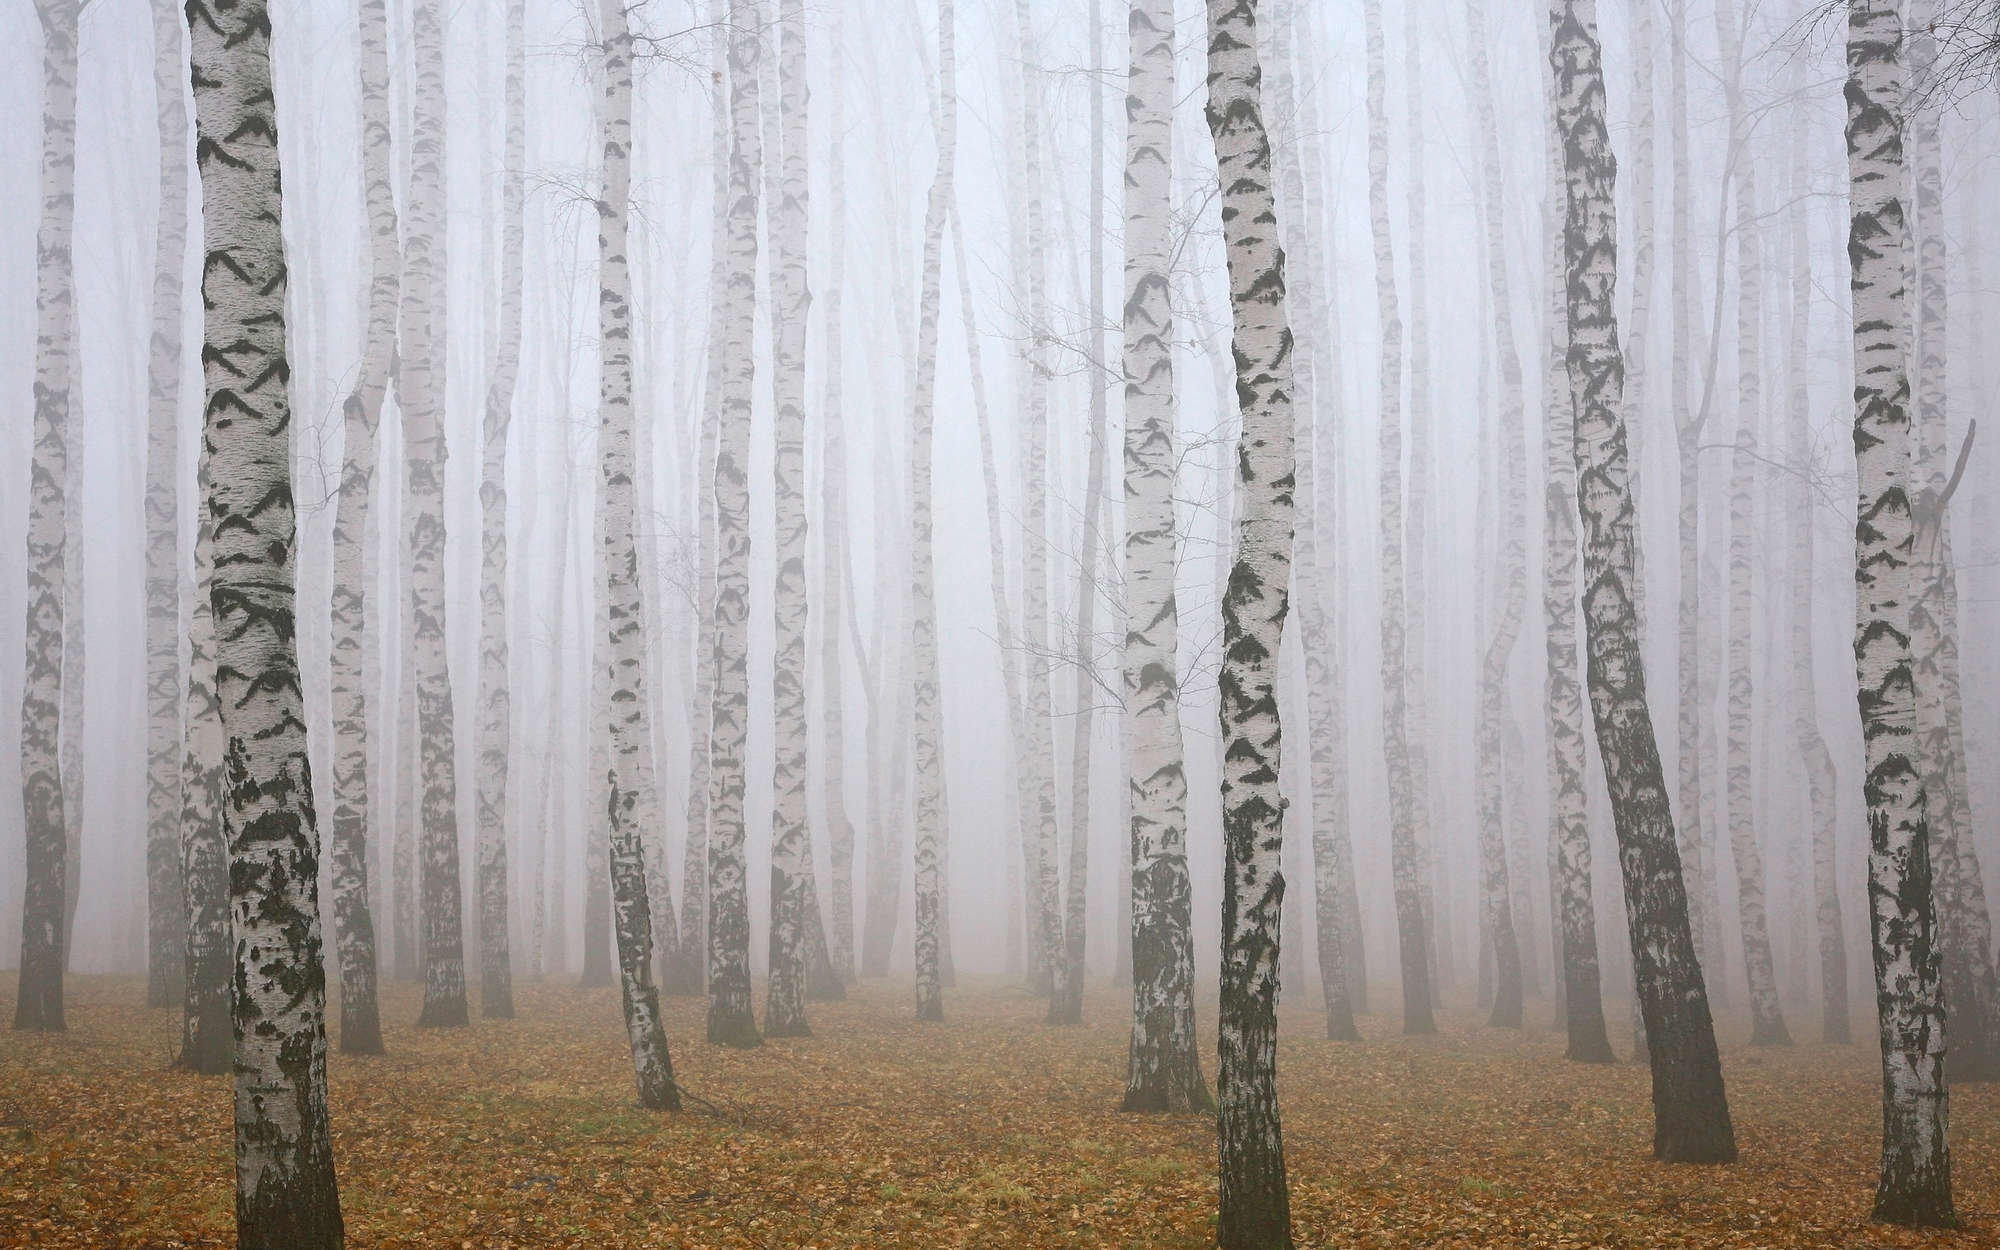             Fototapete Birkenwald im Nebel – Perlmutt Glattvlies
        